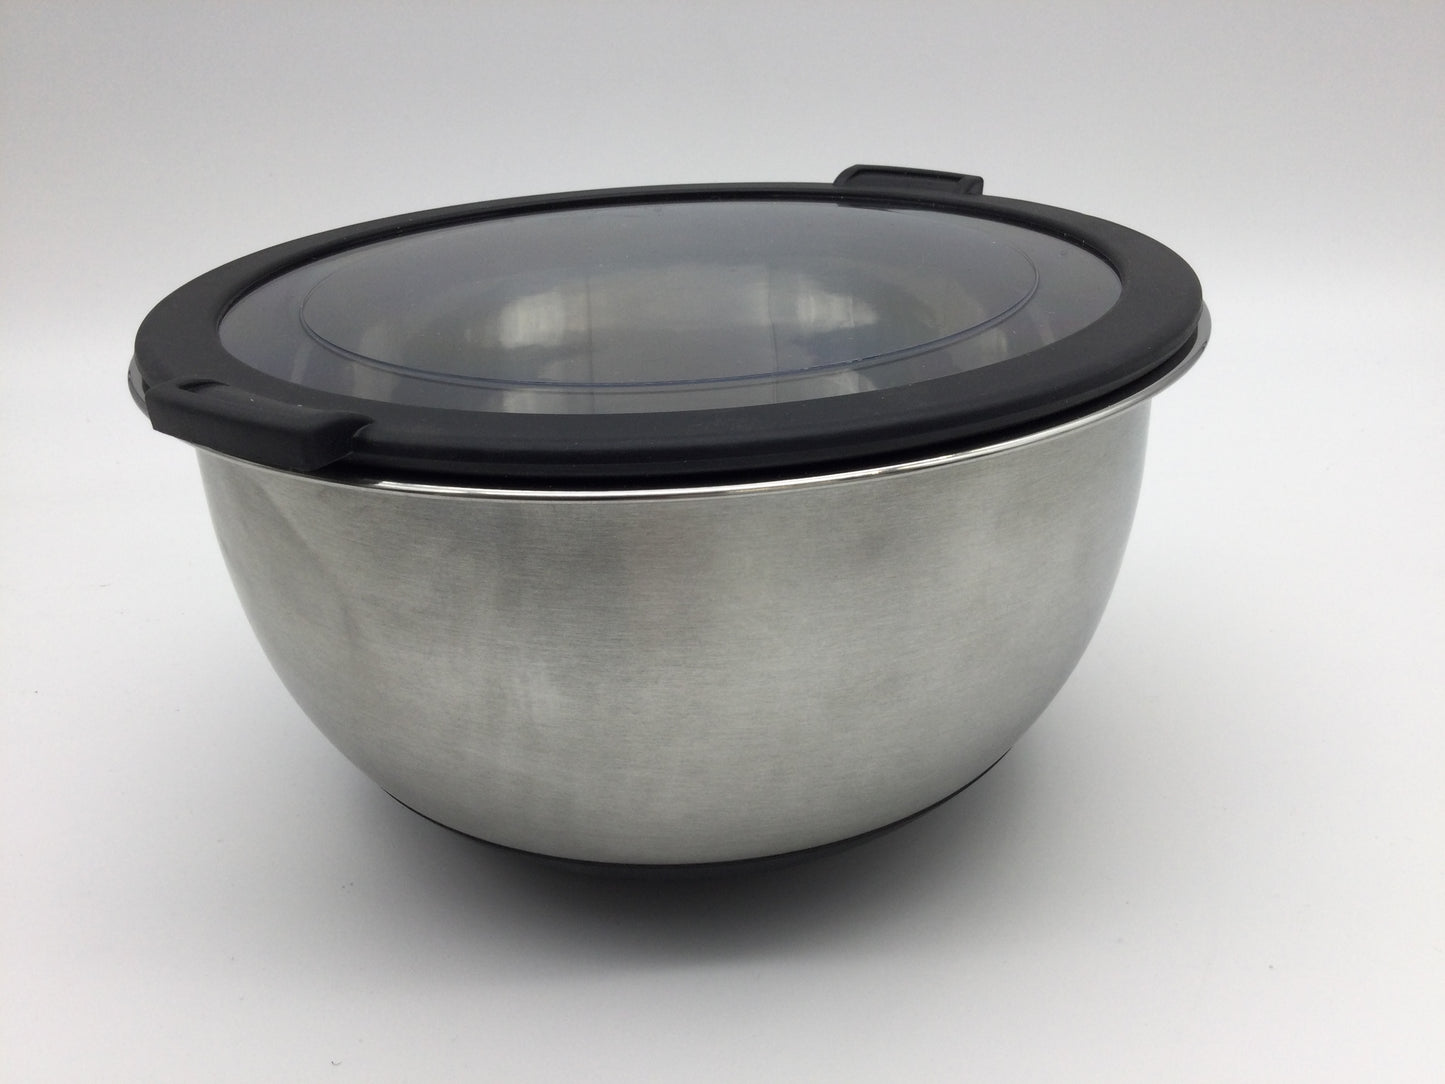 Kitchen Basics Stainless Steel Anti-Skid Mixing Bowl - 1.5 L